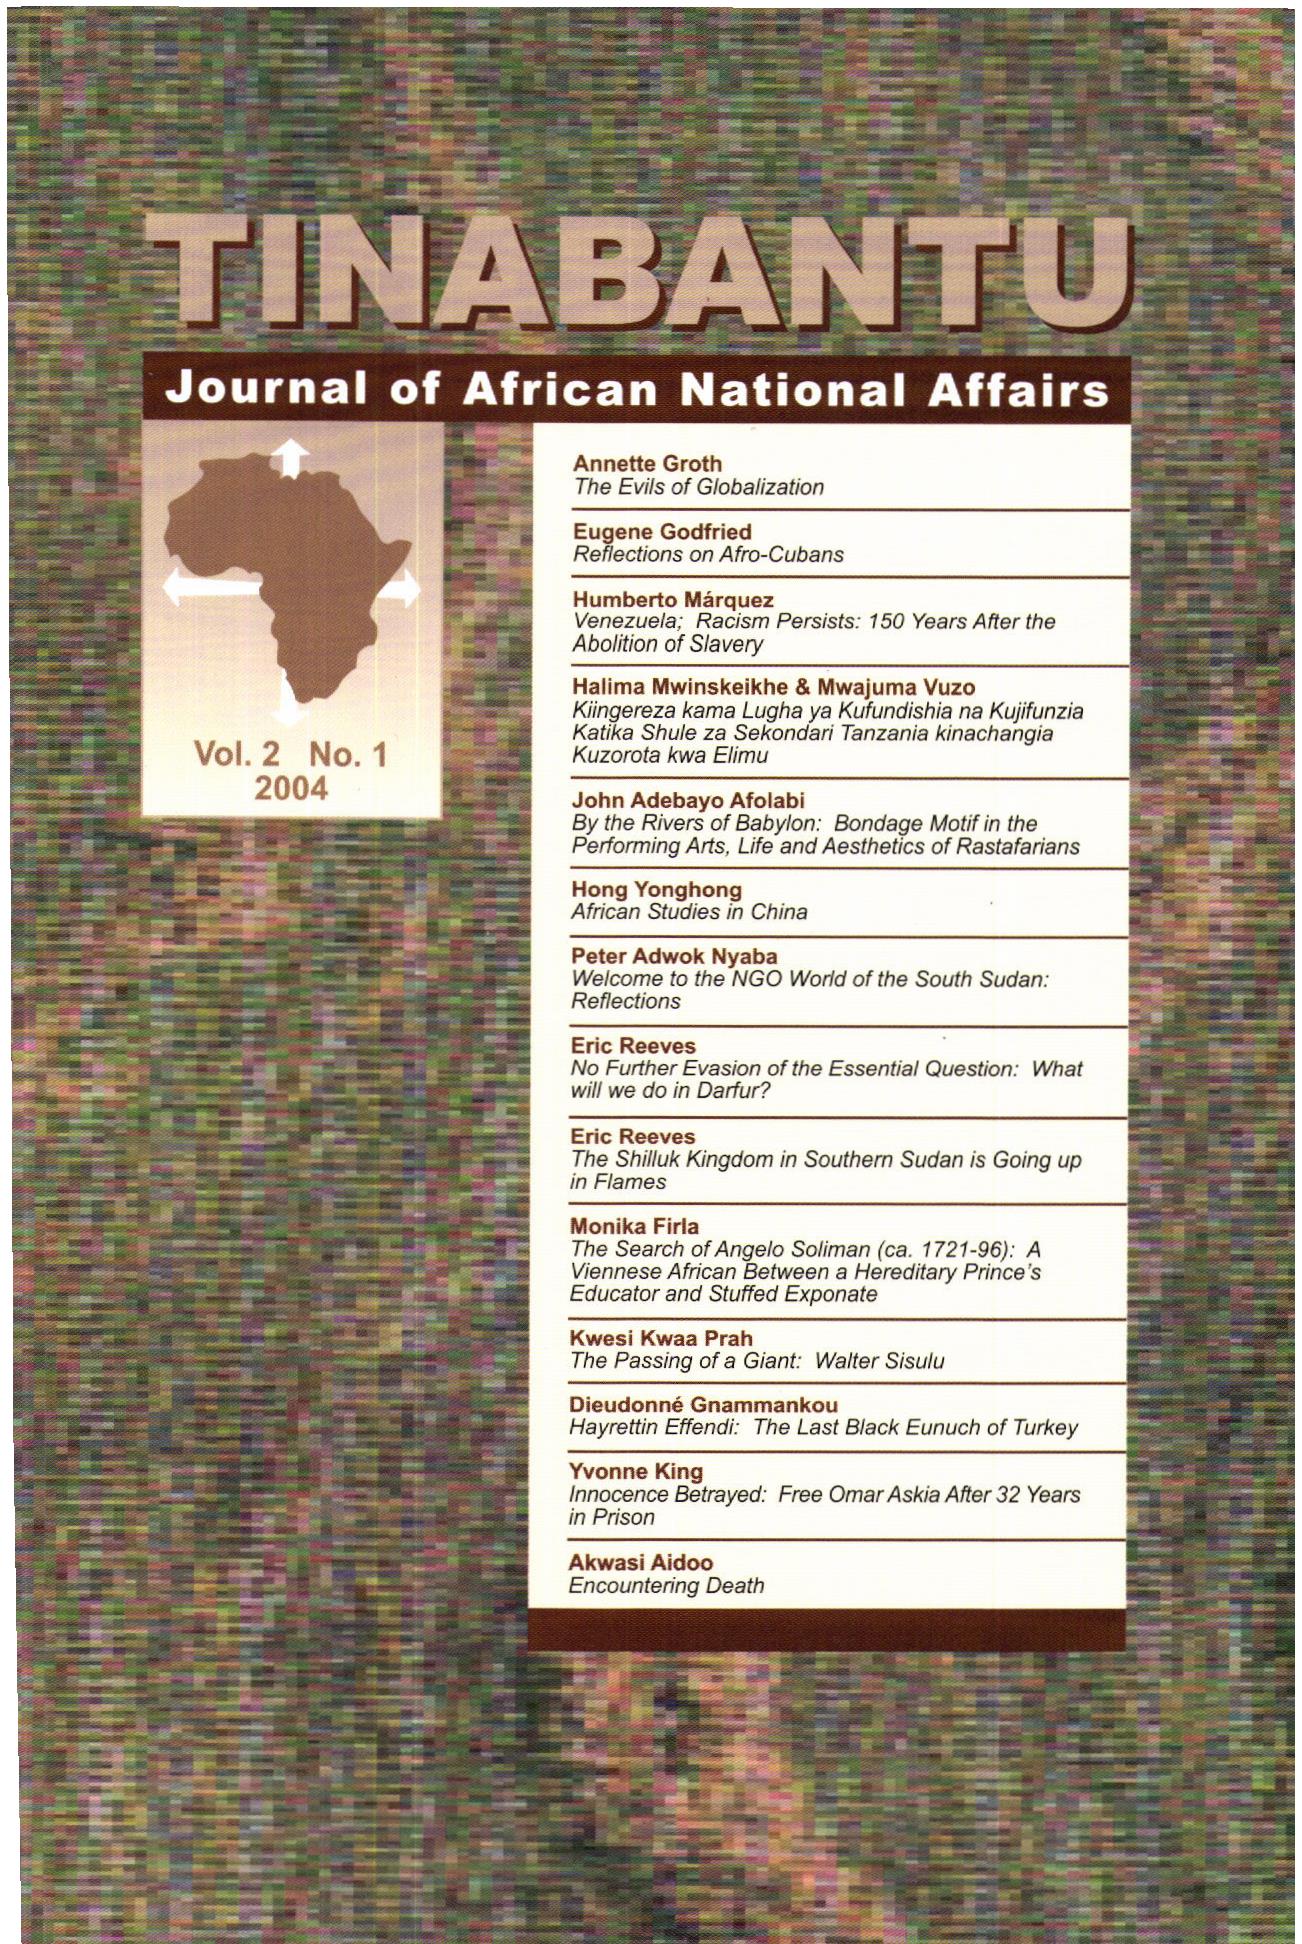 					View Vol. 2 No. 1 (2004): Tinabantu: Journal of African National Affairs
				